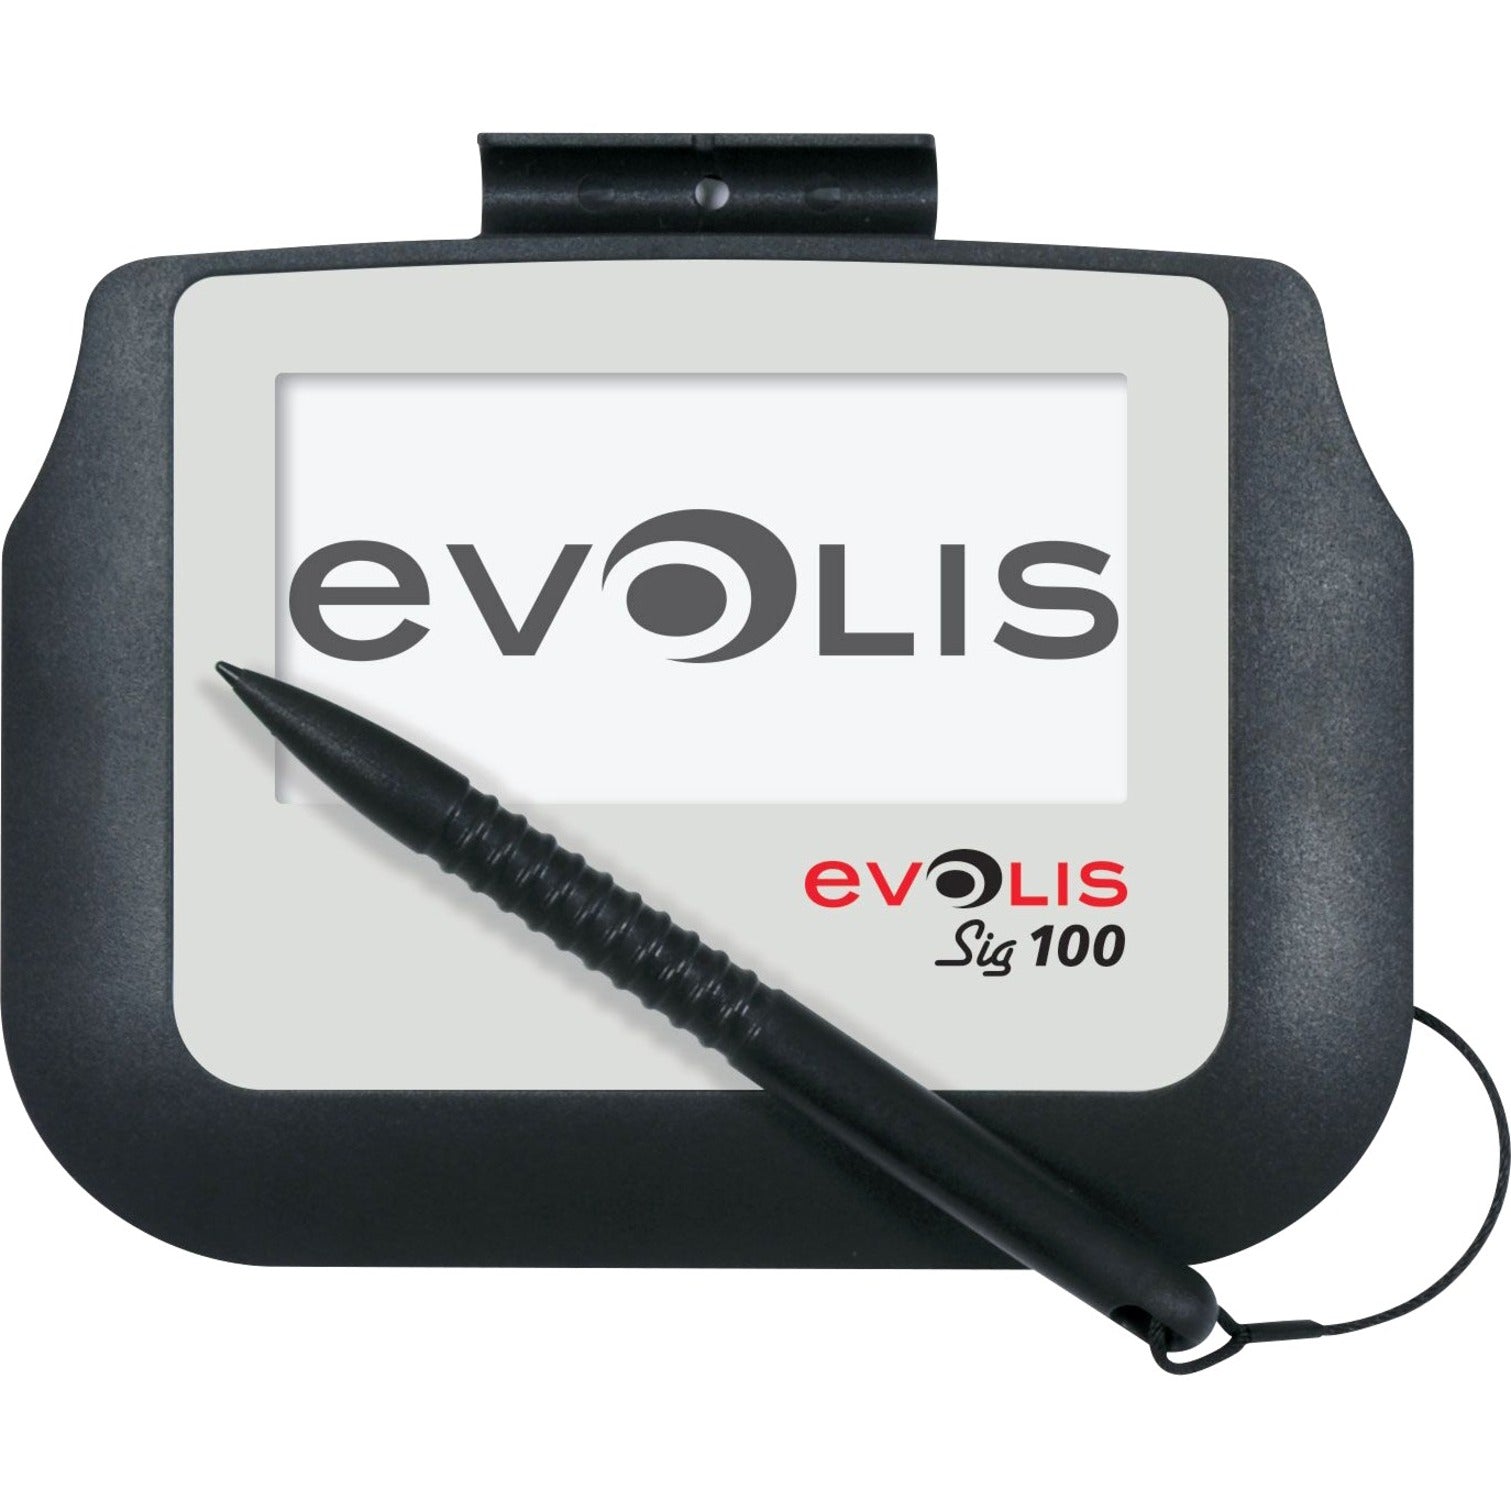 Evolis ST-BE105-2-UEVL Sig100 Signature Pad, 2 Year Limited Warranty, USB Interface, LCD Display